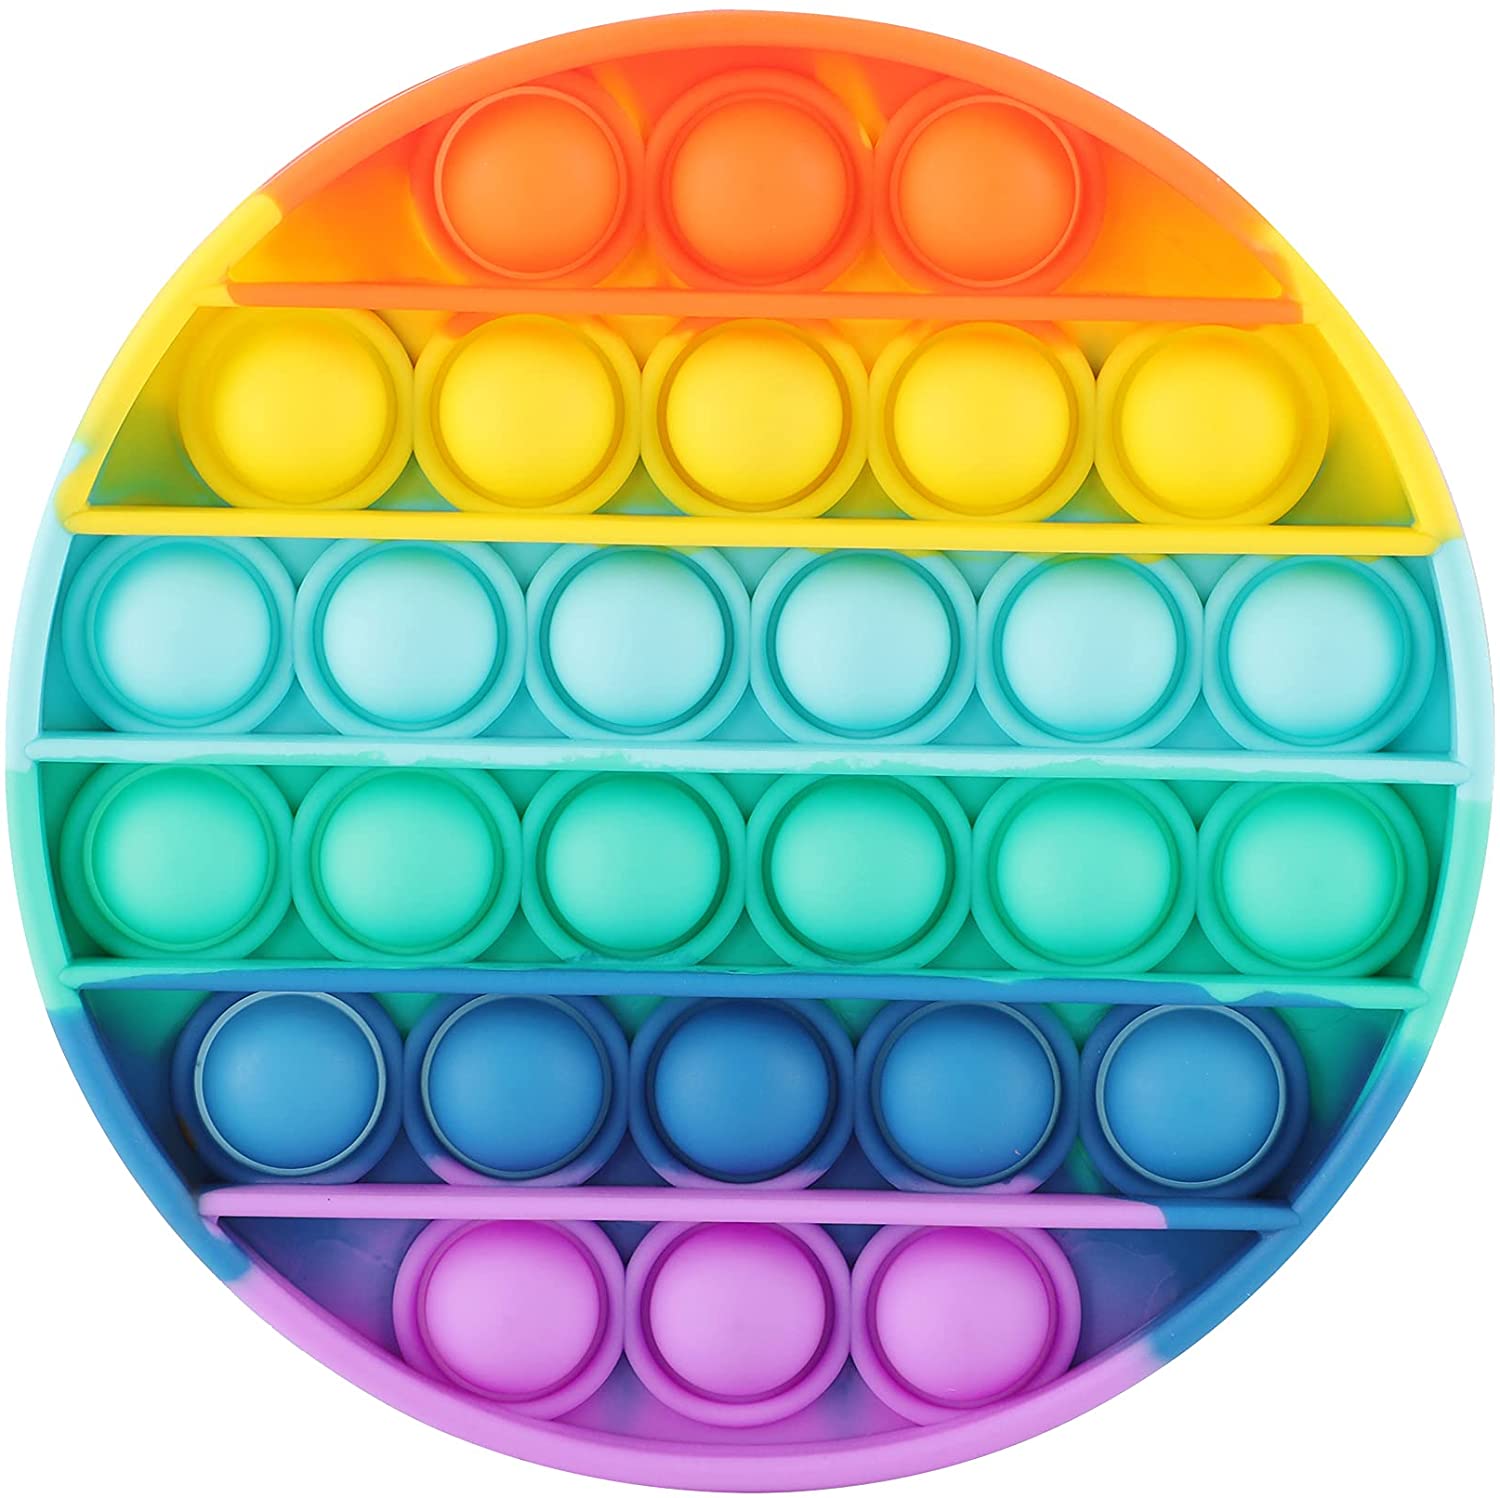 7 cool fidget toys that aren't spinners: Rainbow popper fidget toy | Amazon 